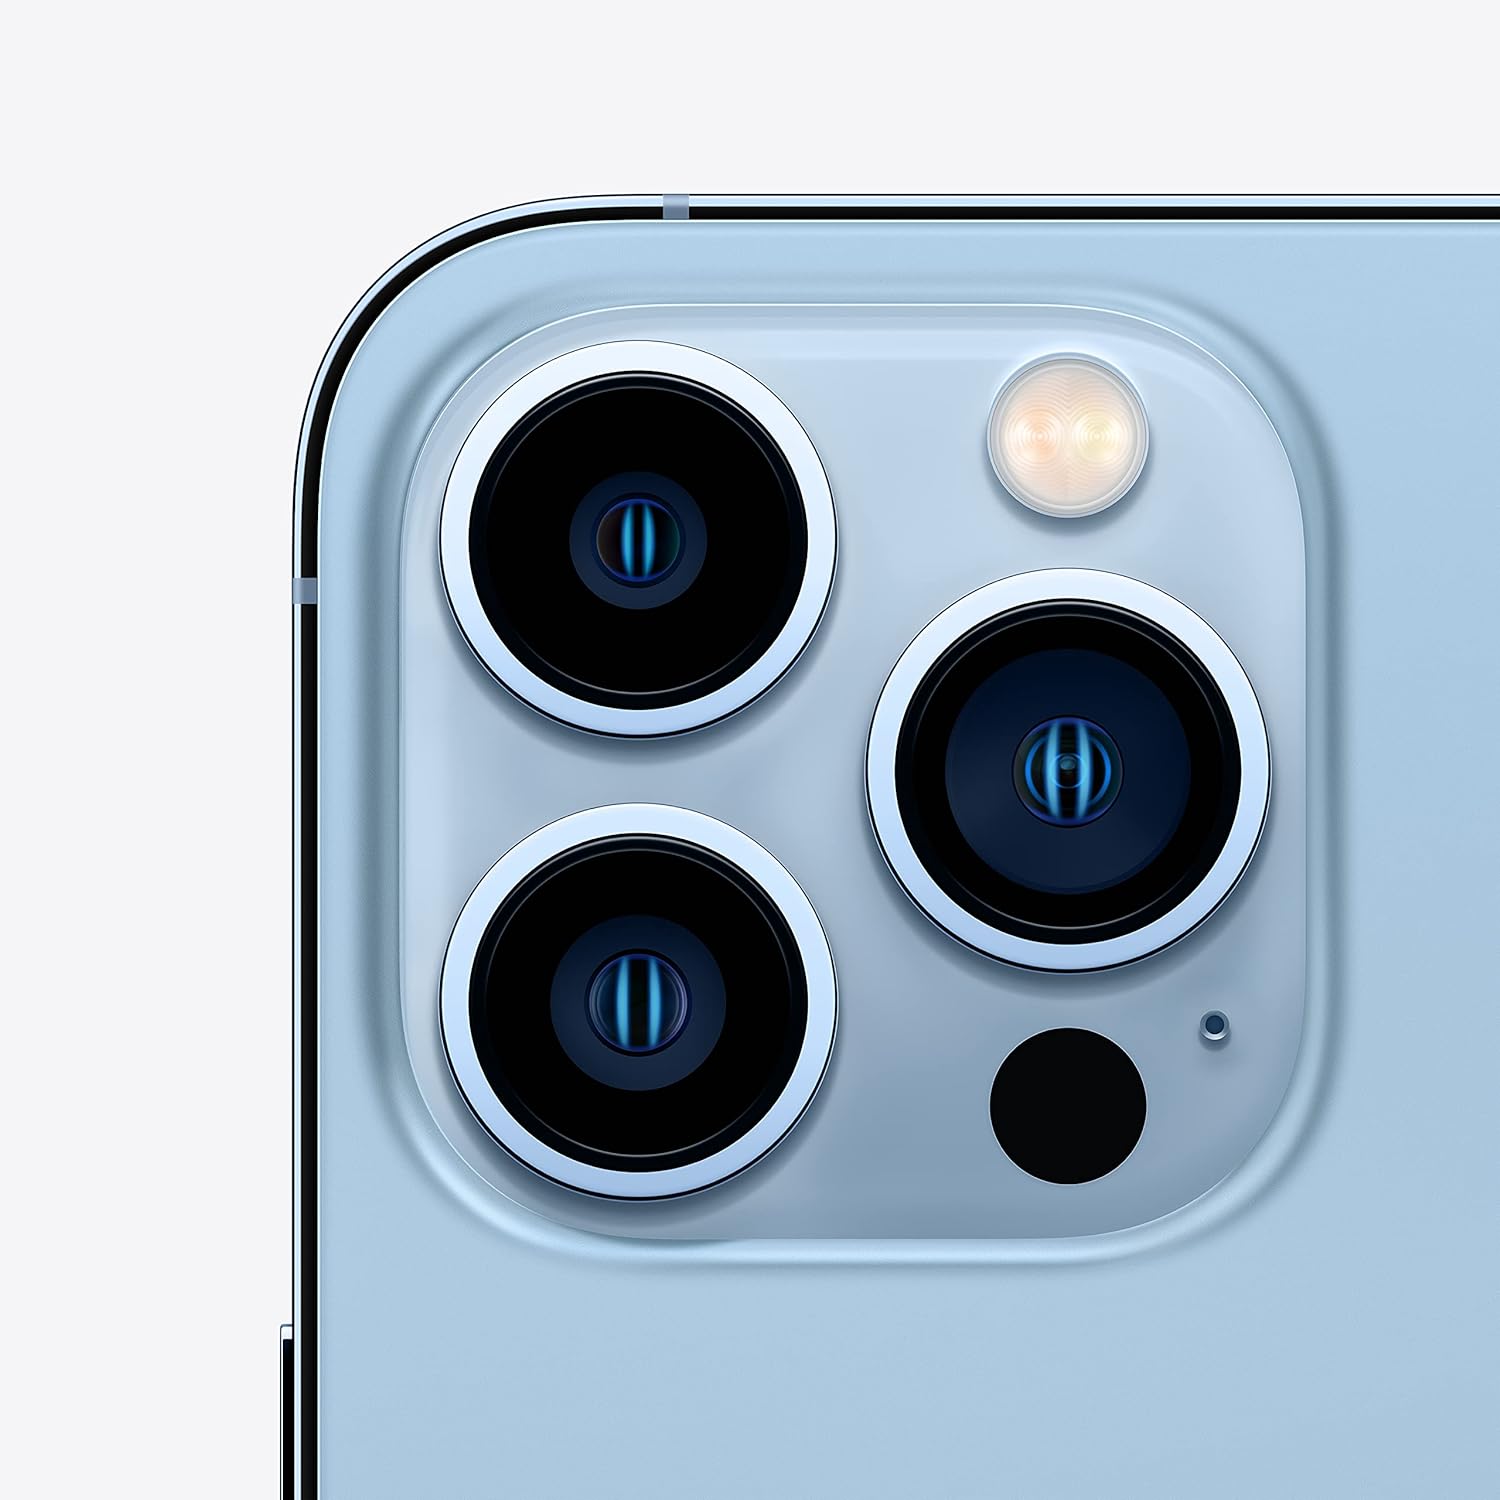 Apple iPhone 13 Pro Max (512GB) - Sierra Blue (Renewed)